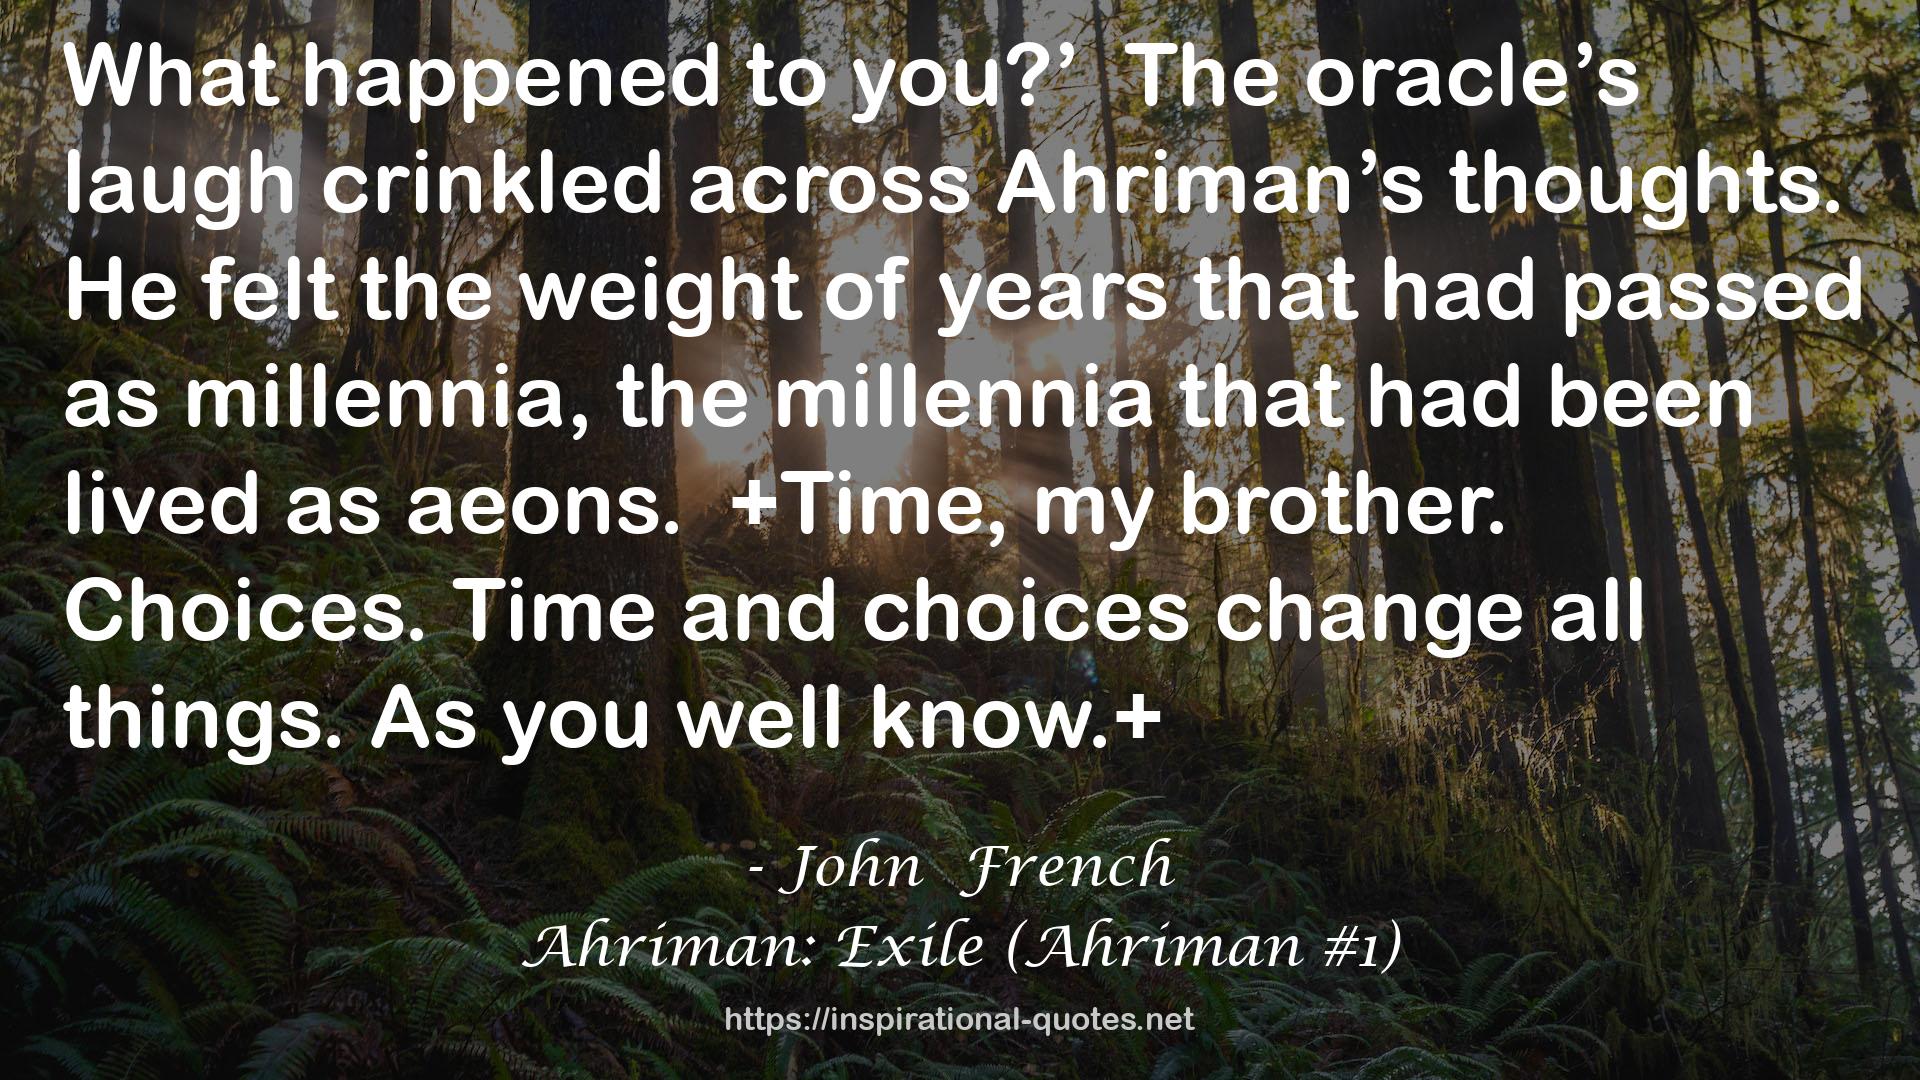 Ahriman: Exile (Ahriman #1) QUOTES